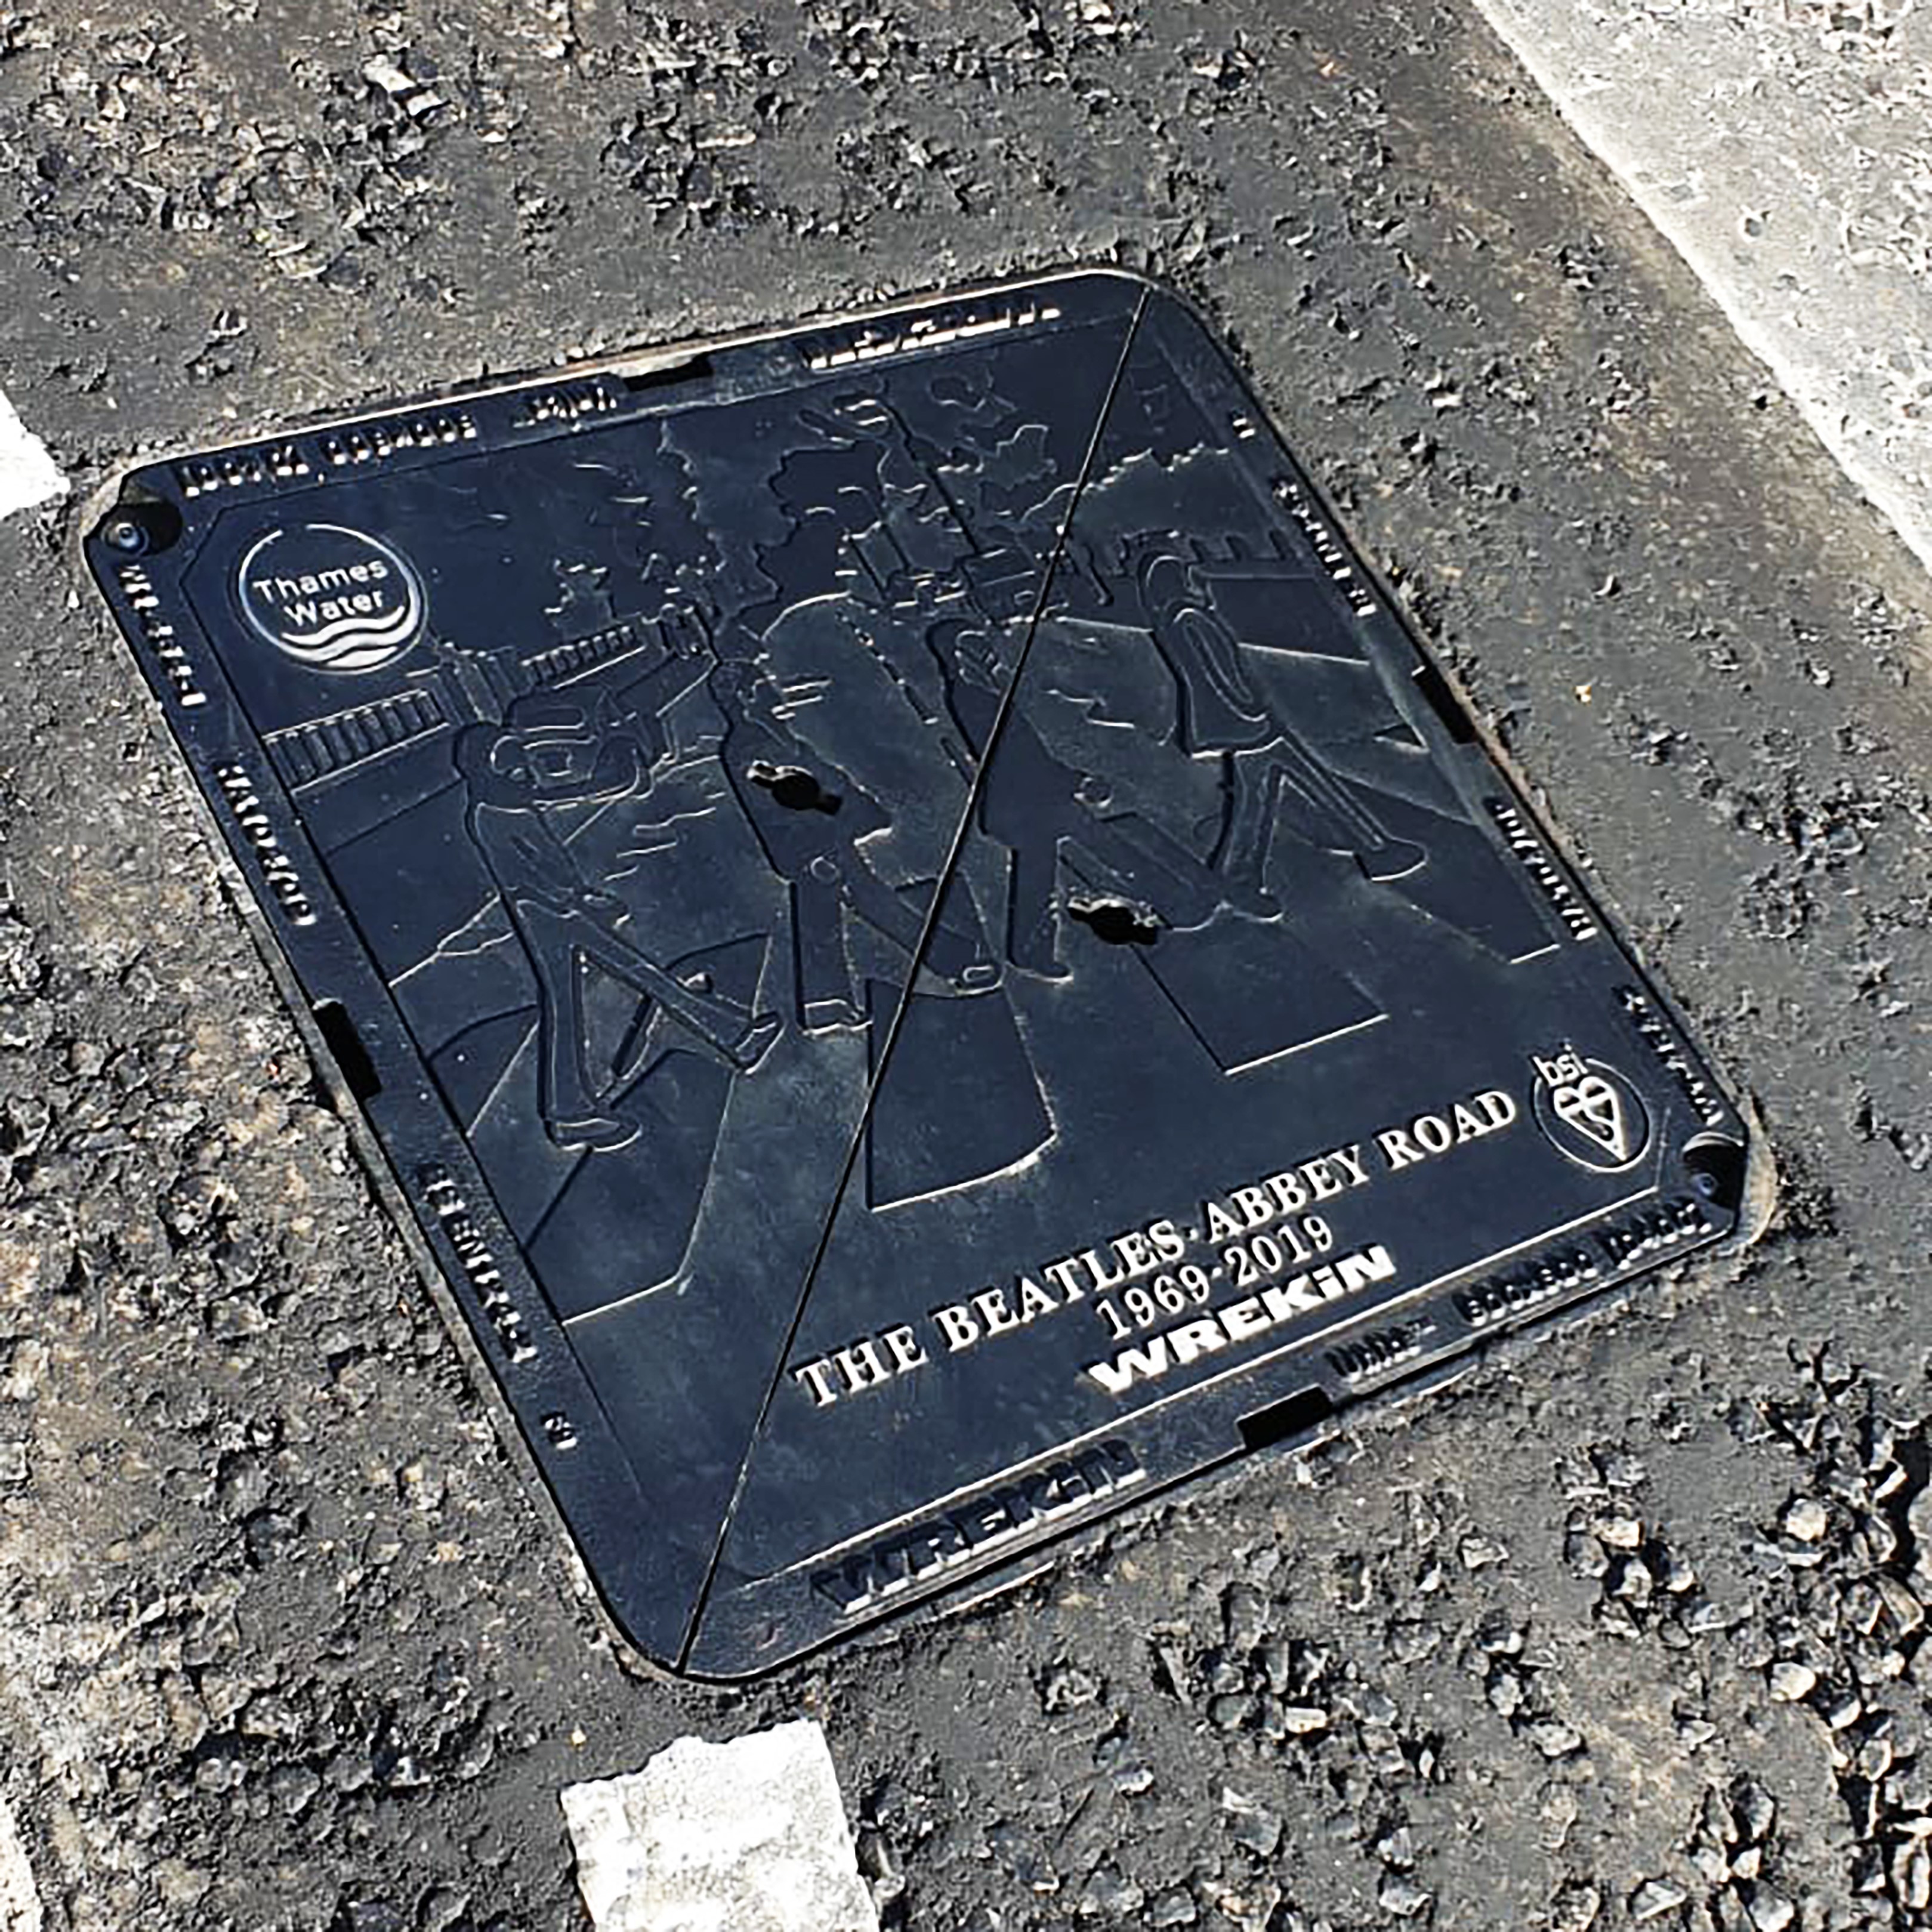 Abbey Road custom manhole cover close up